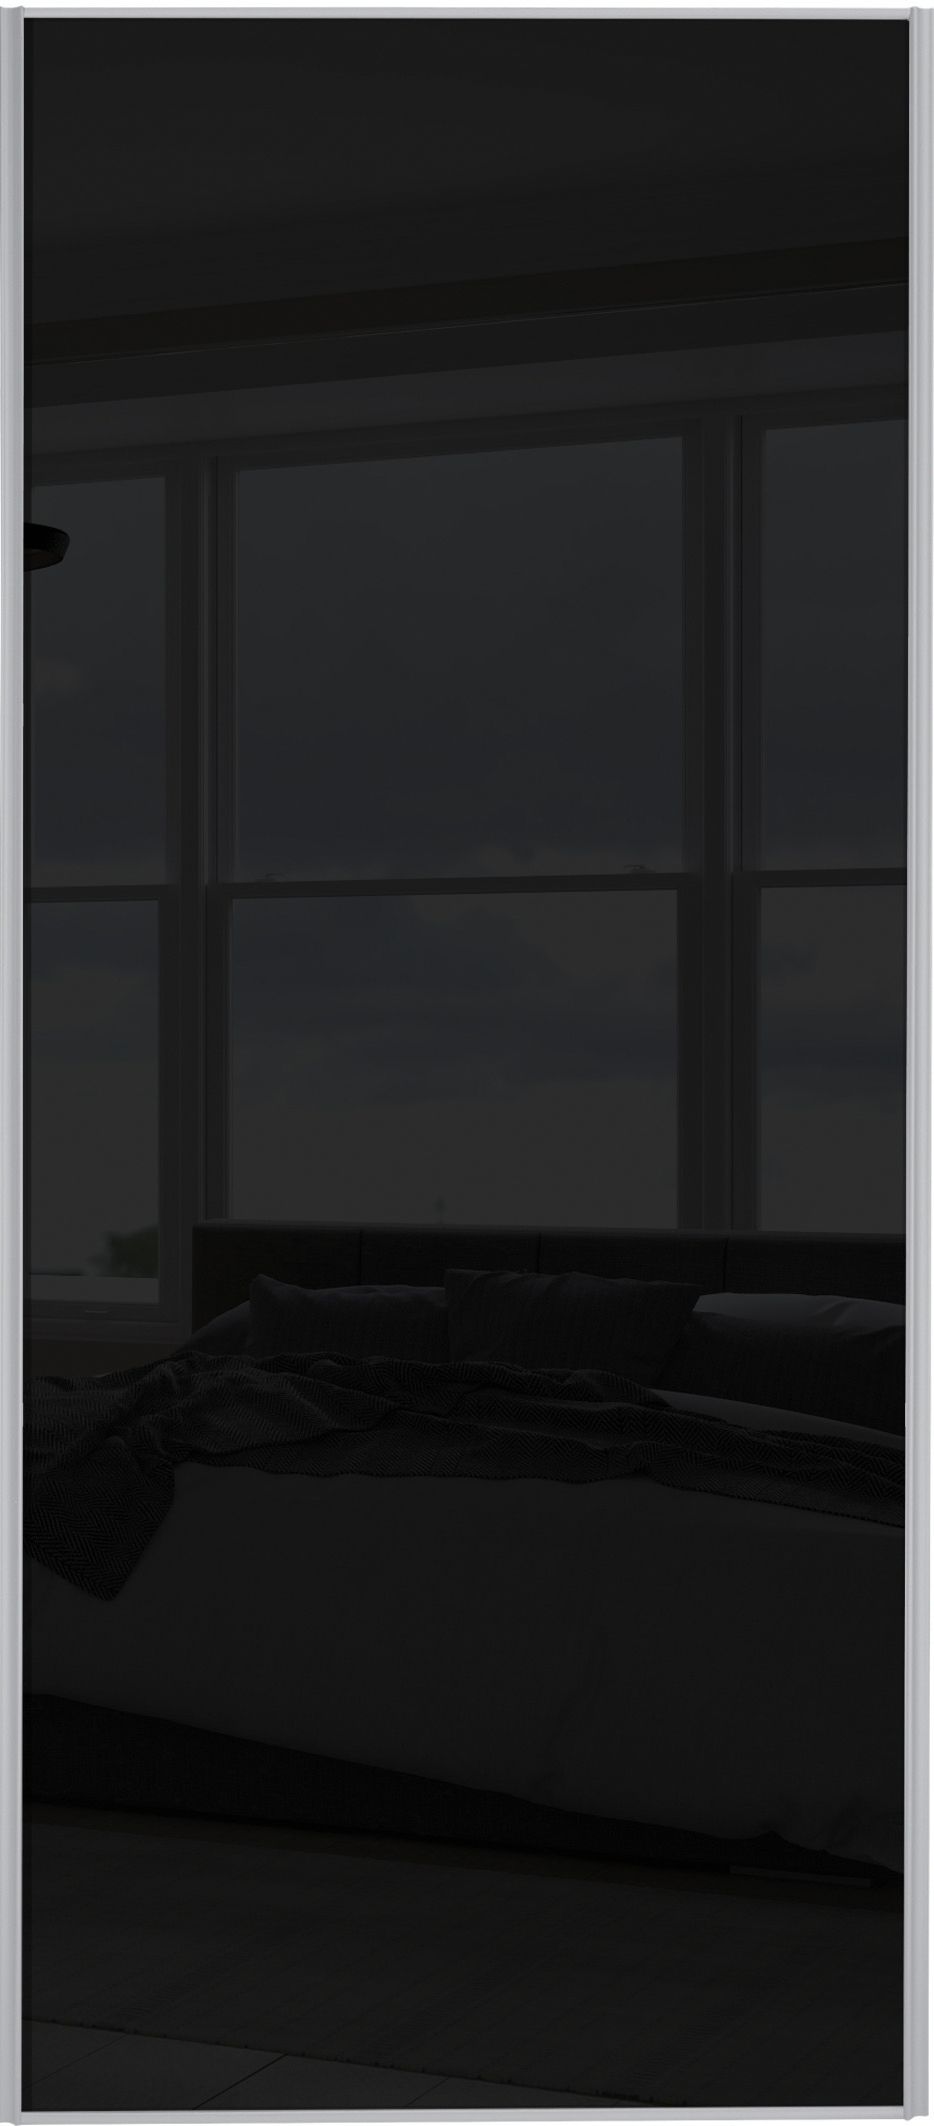 Image of Spacepro Sliding Wardrobe Door Silver Framed Single Panel Black Glass - 2220 x 762mm